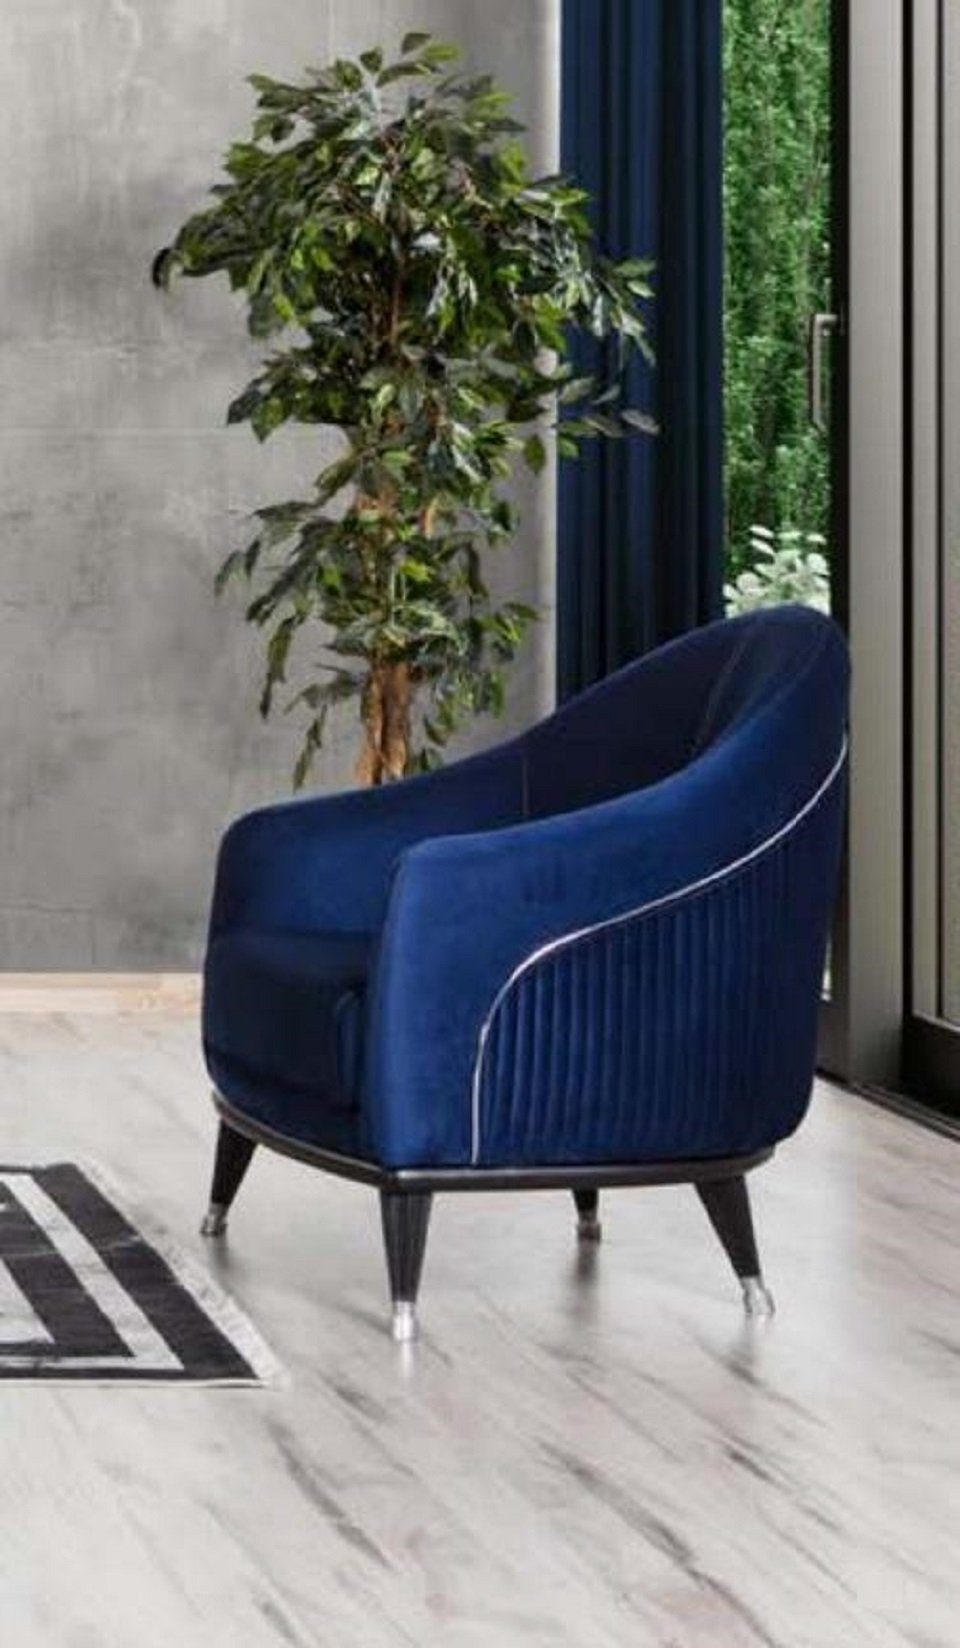 JVmoebel Sessel Lehnstuhl Sessel 1 Sitz Sitz Stoff Luxus Wohnzimmer Modern Blau Neu (Sessel), Made in Europe